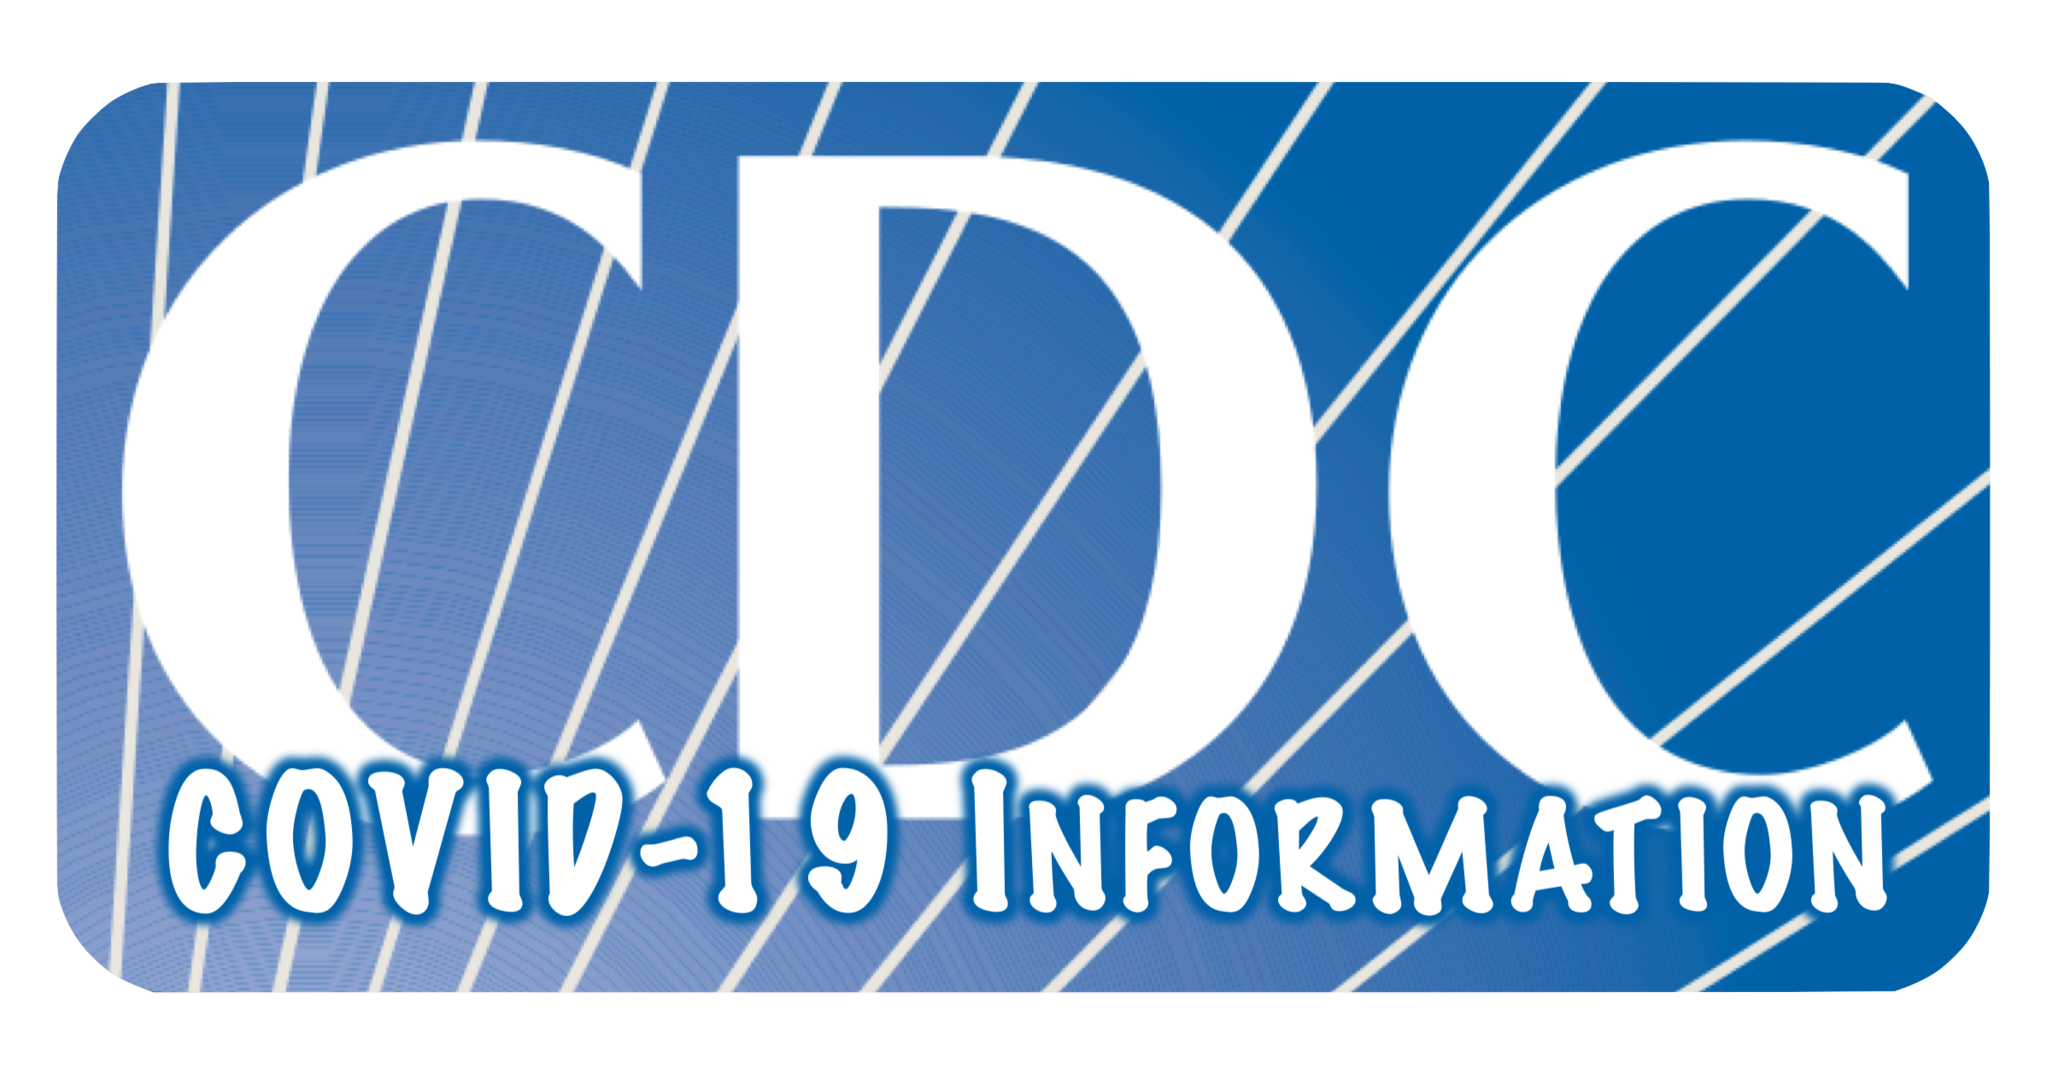 CDC's COVID-19 information